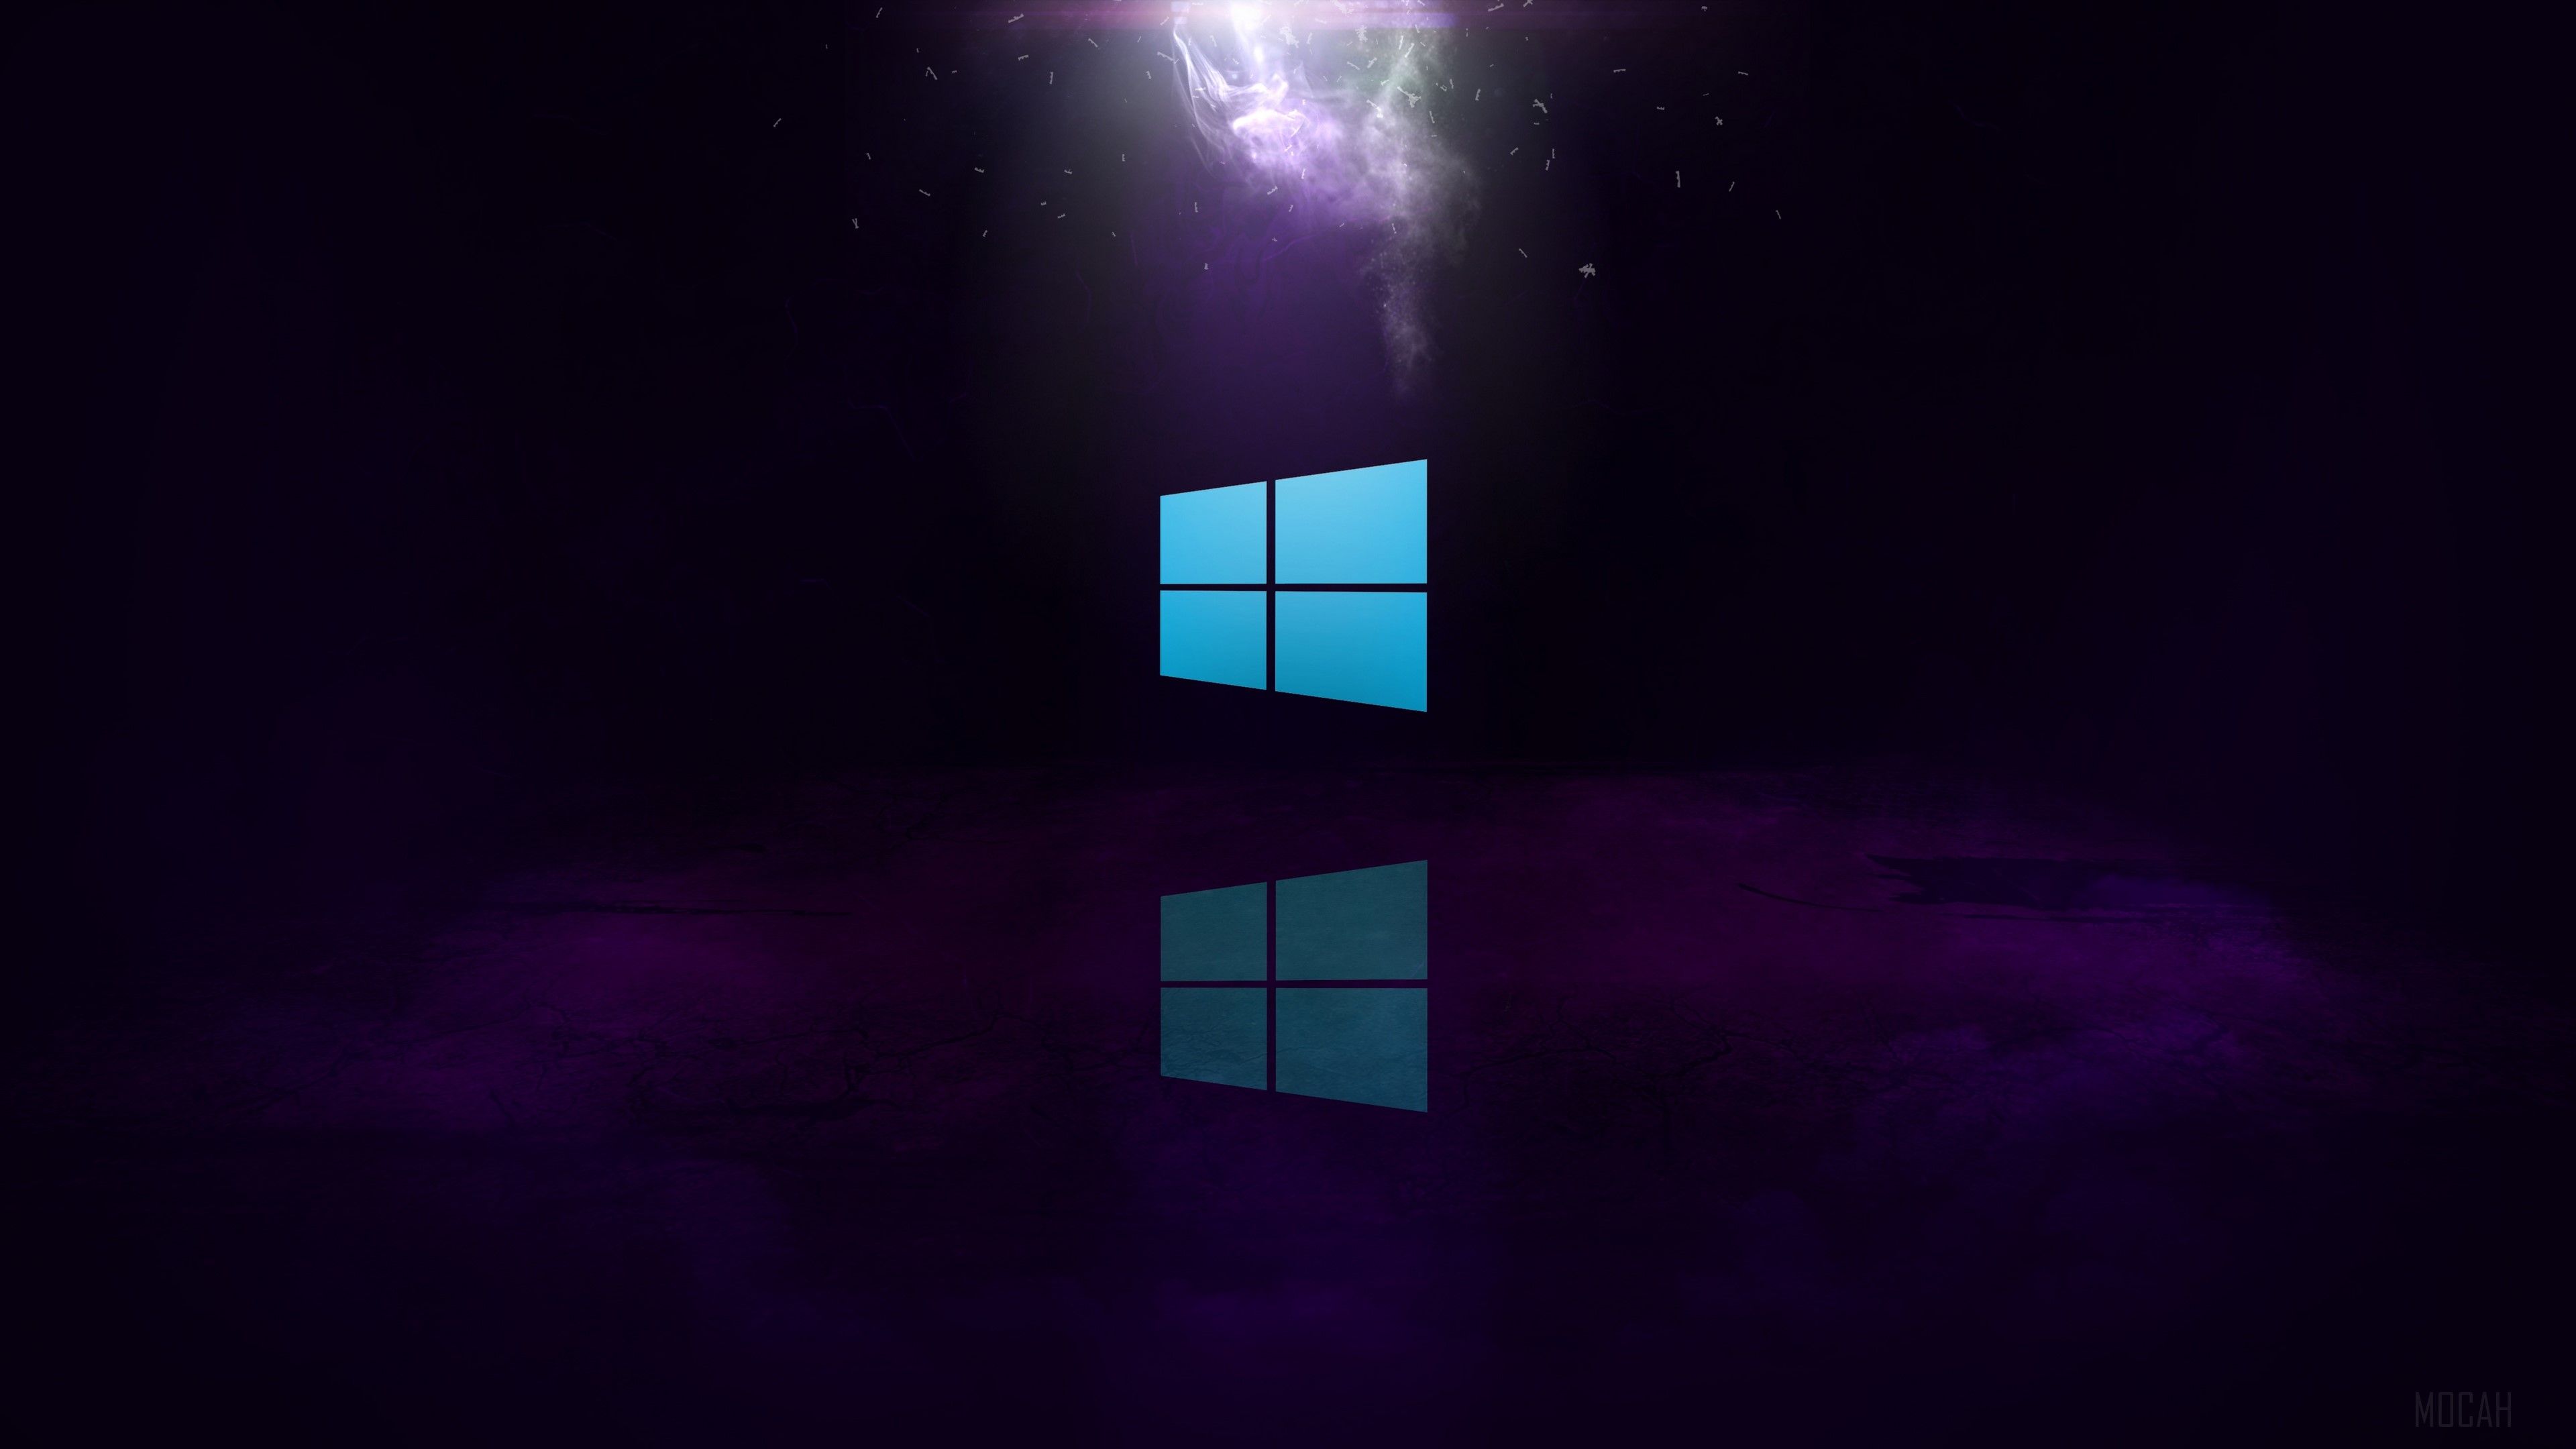  Windows 10 HD Hintergrundbild 3840x2160. windows 10 1080P, 2k, 4k HD wallpaper, background free download